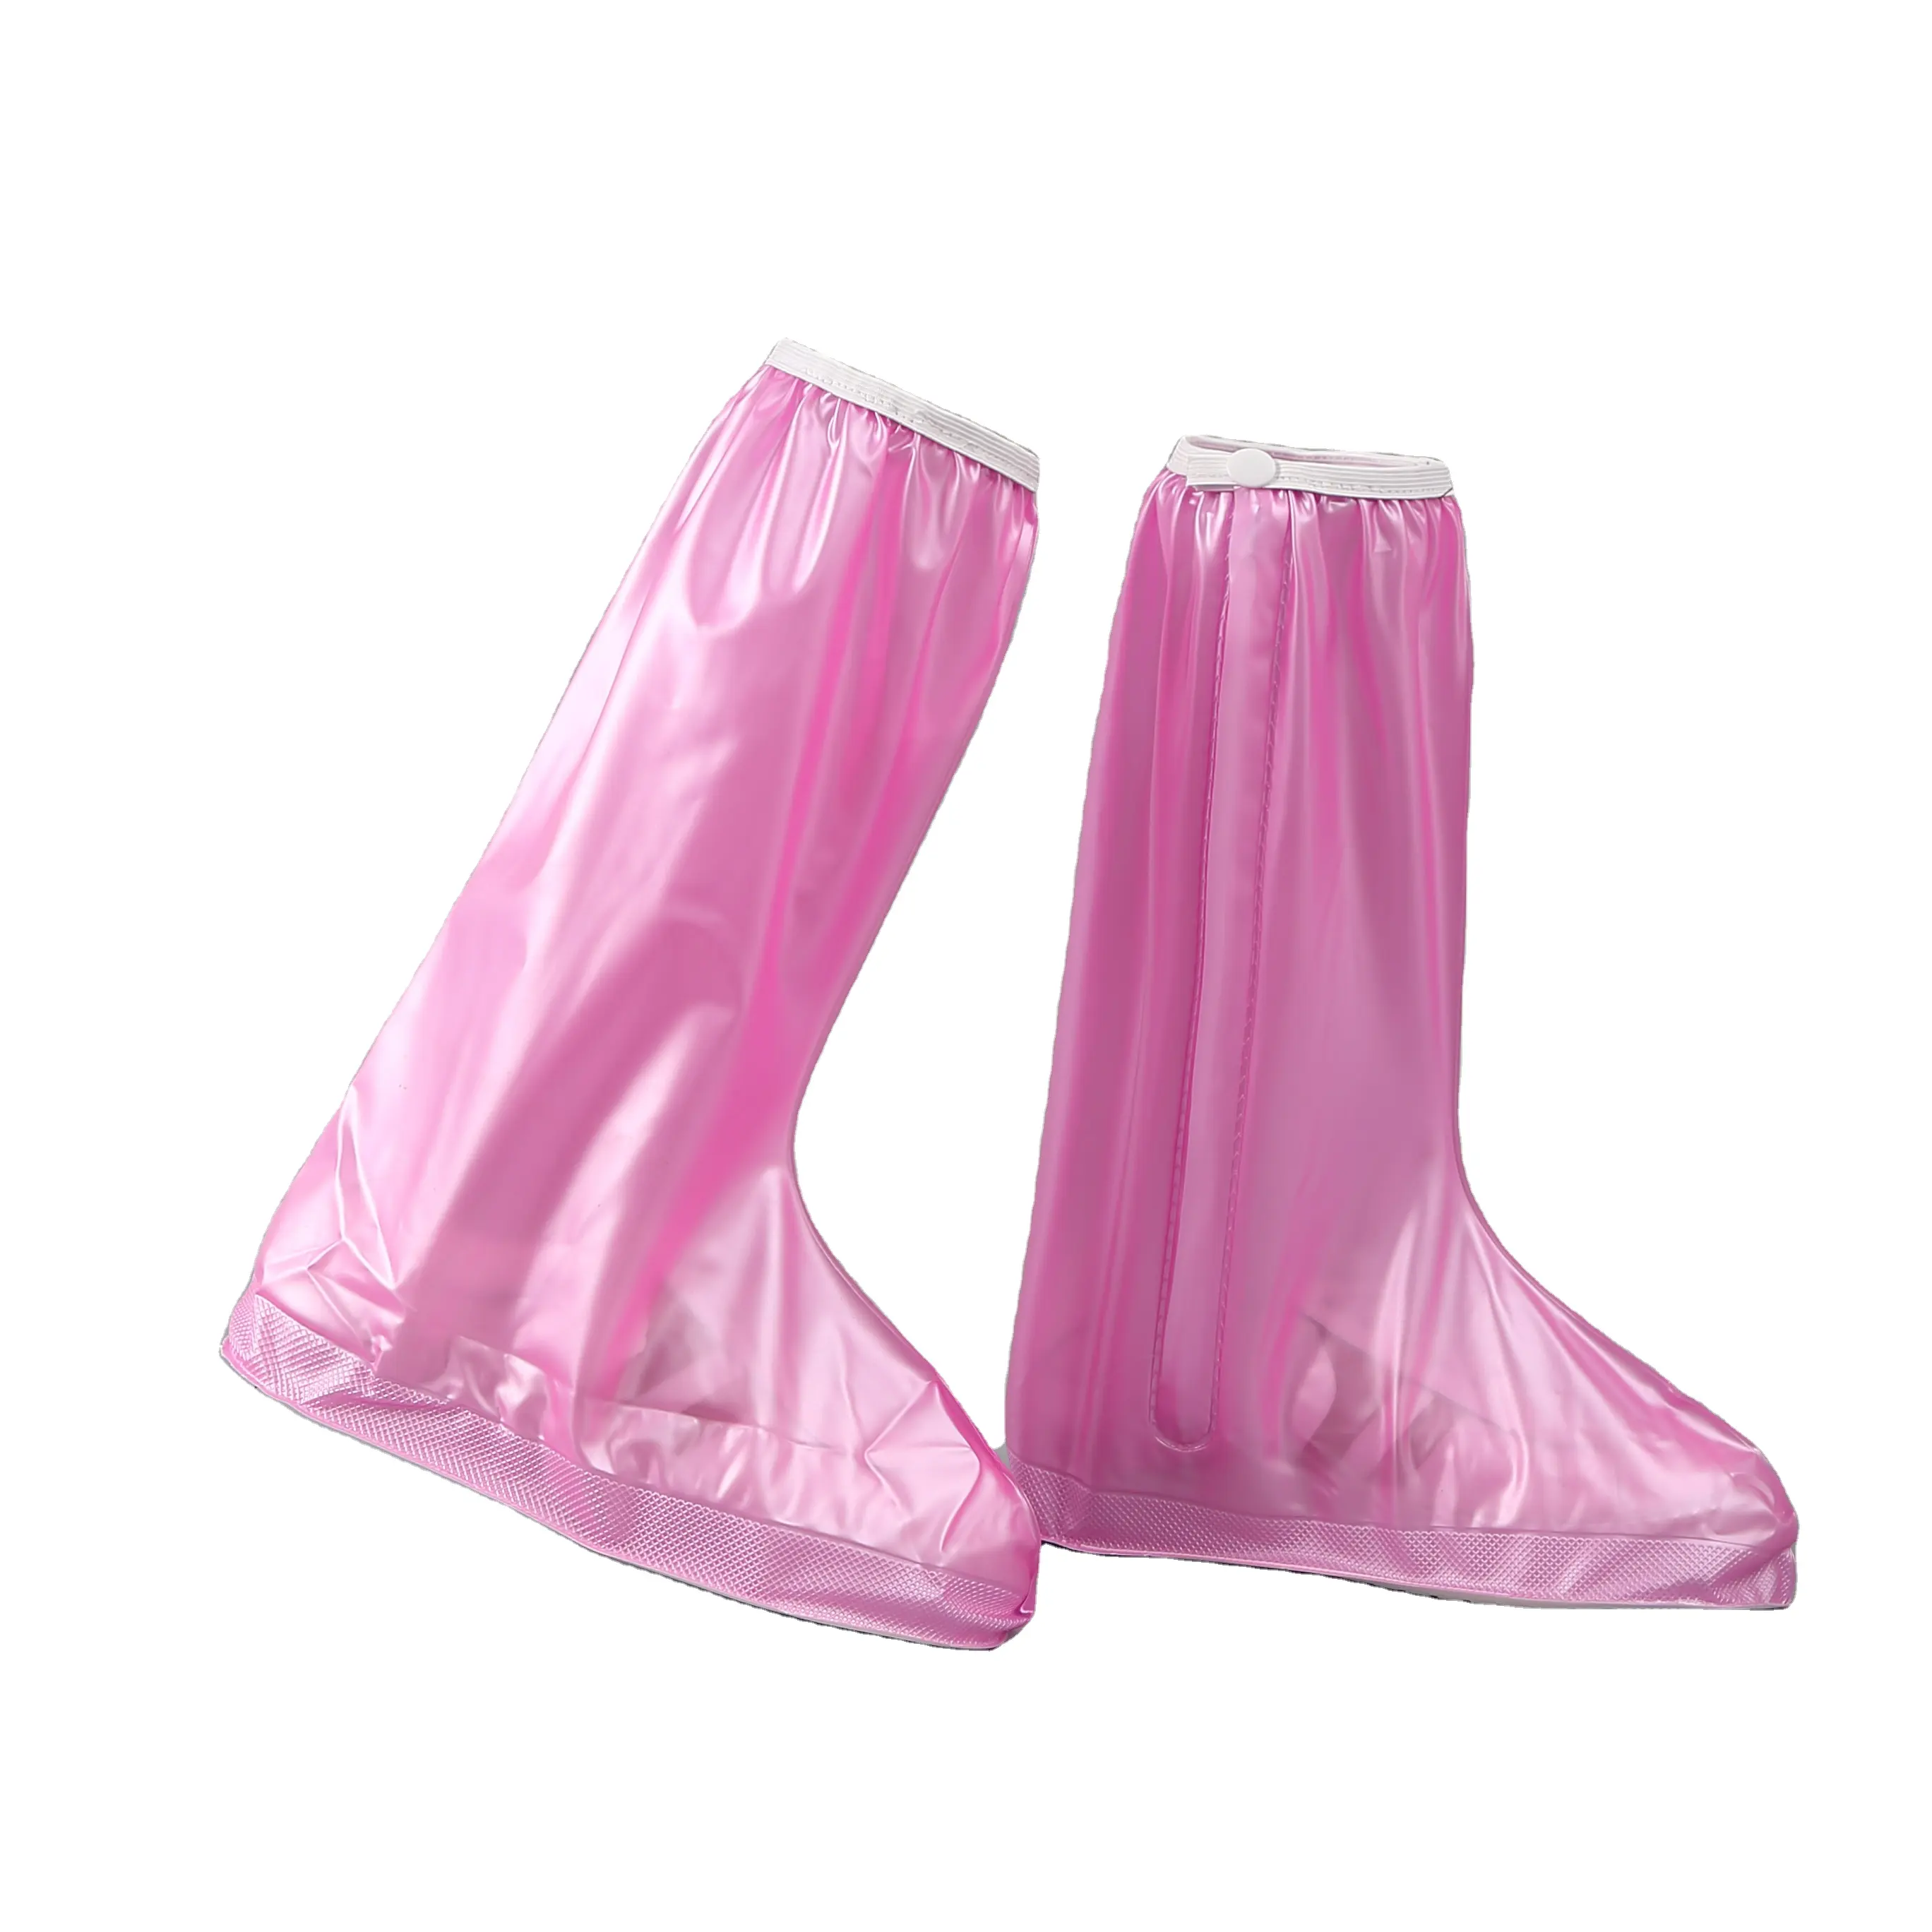 Бахилы на обувь ПВХ от воды и грязи LVR 819A M 37-38 26.5 см (Pink)